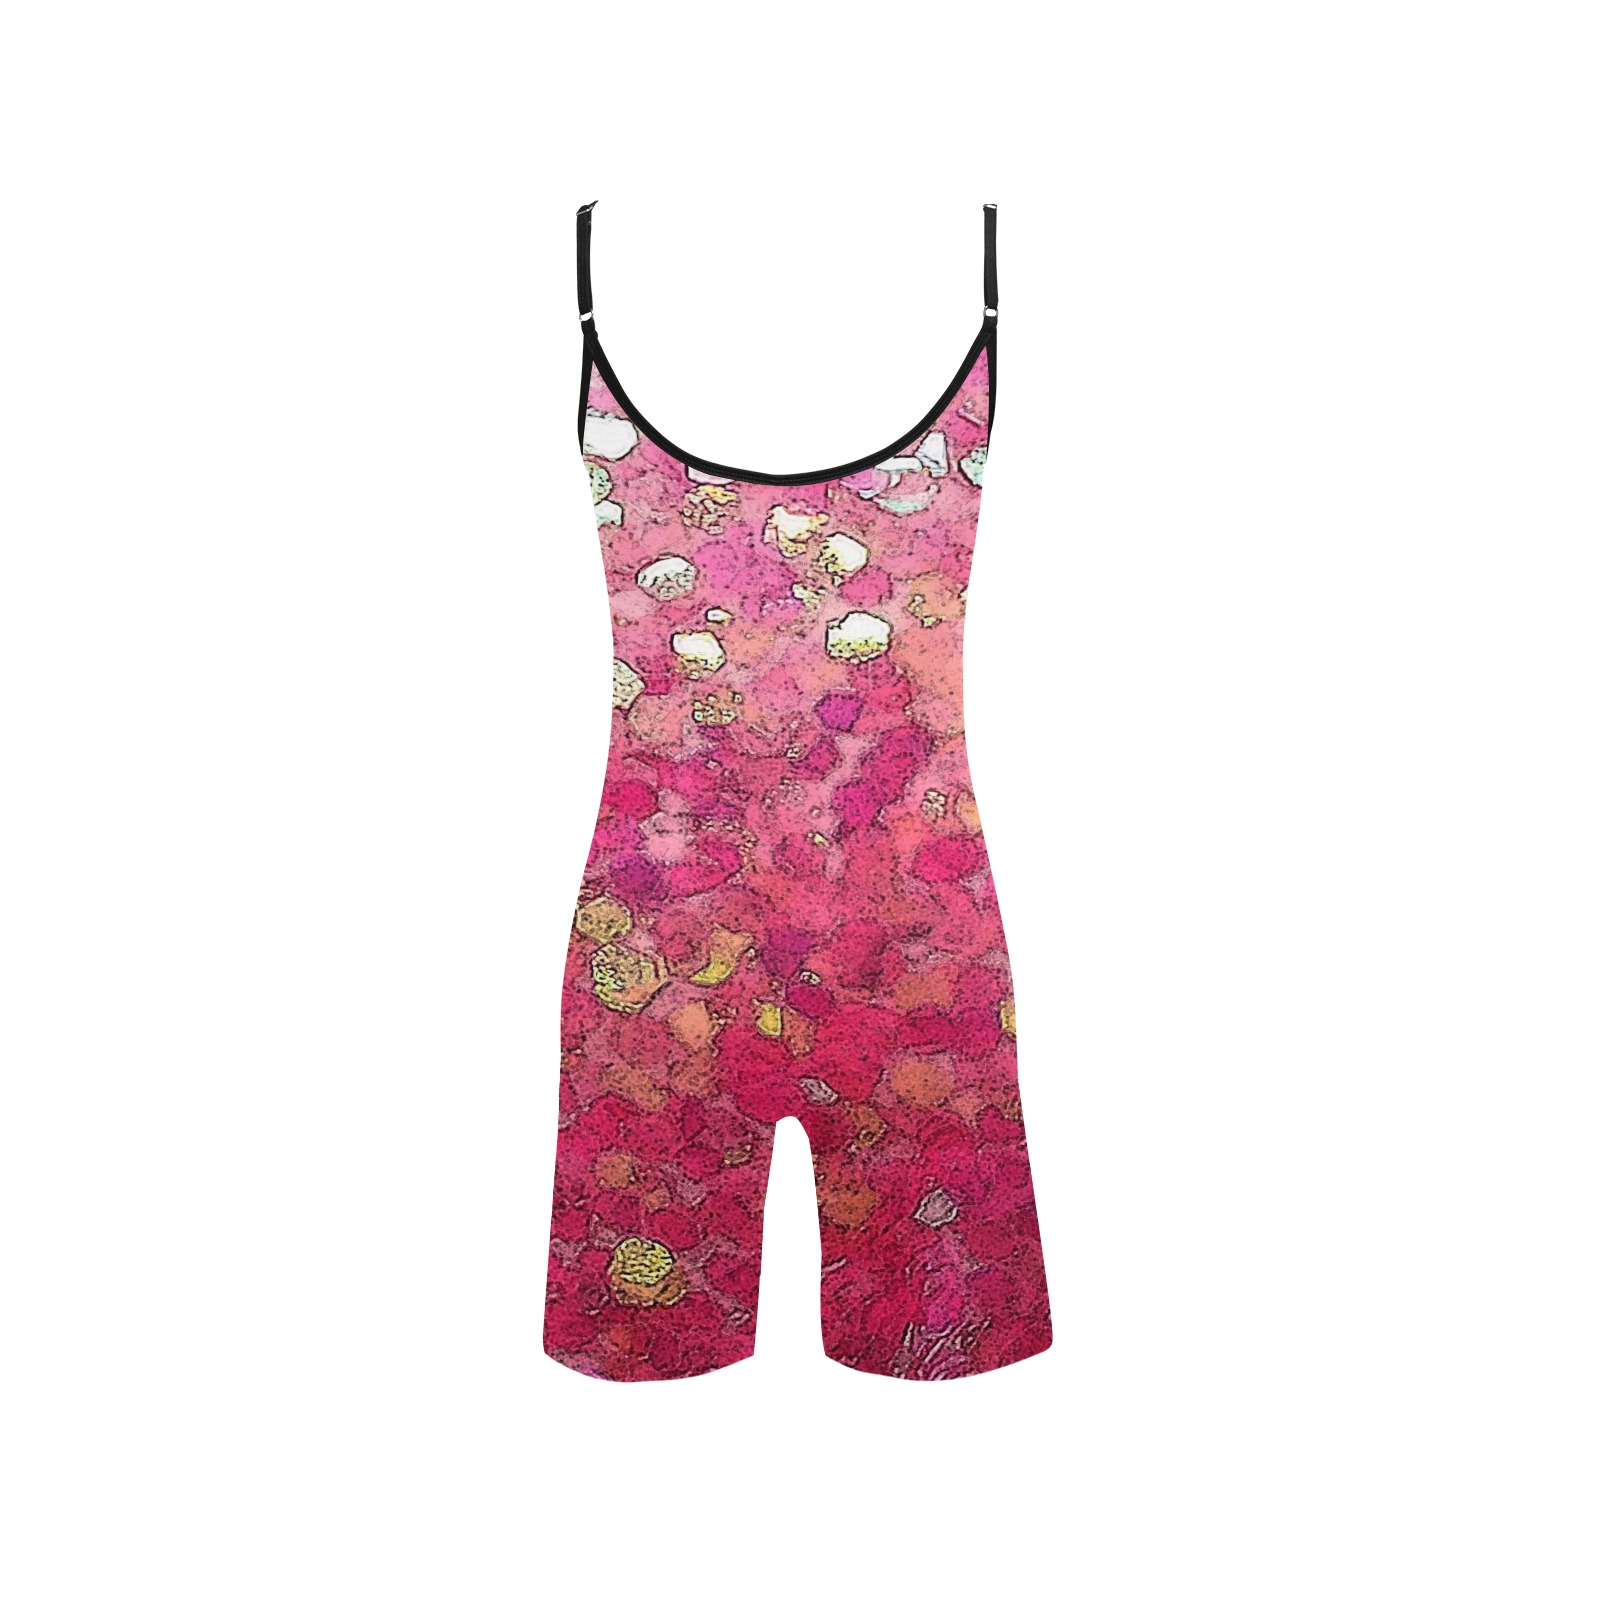 Glittery Pink Women's Short Yoga Bodysuit